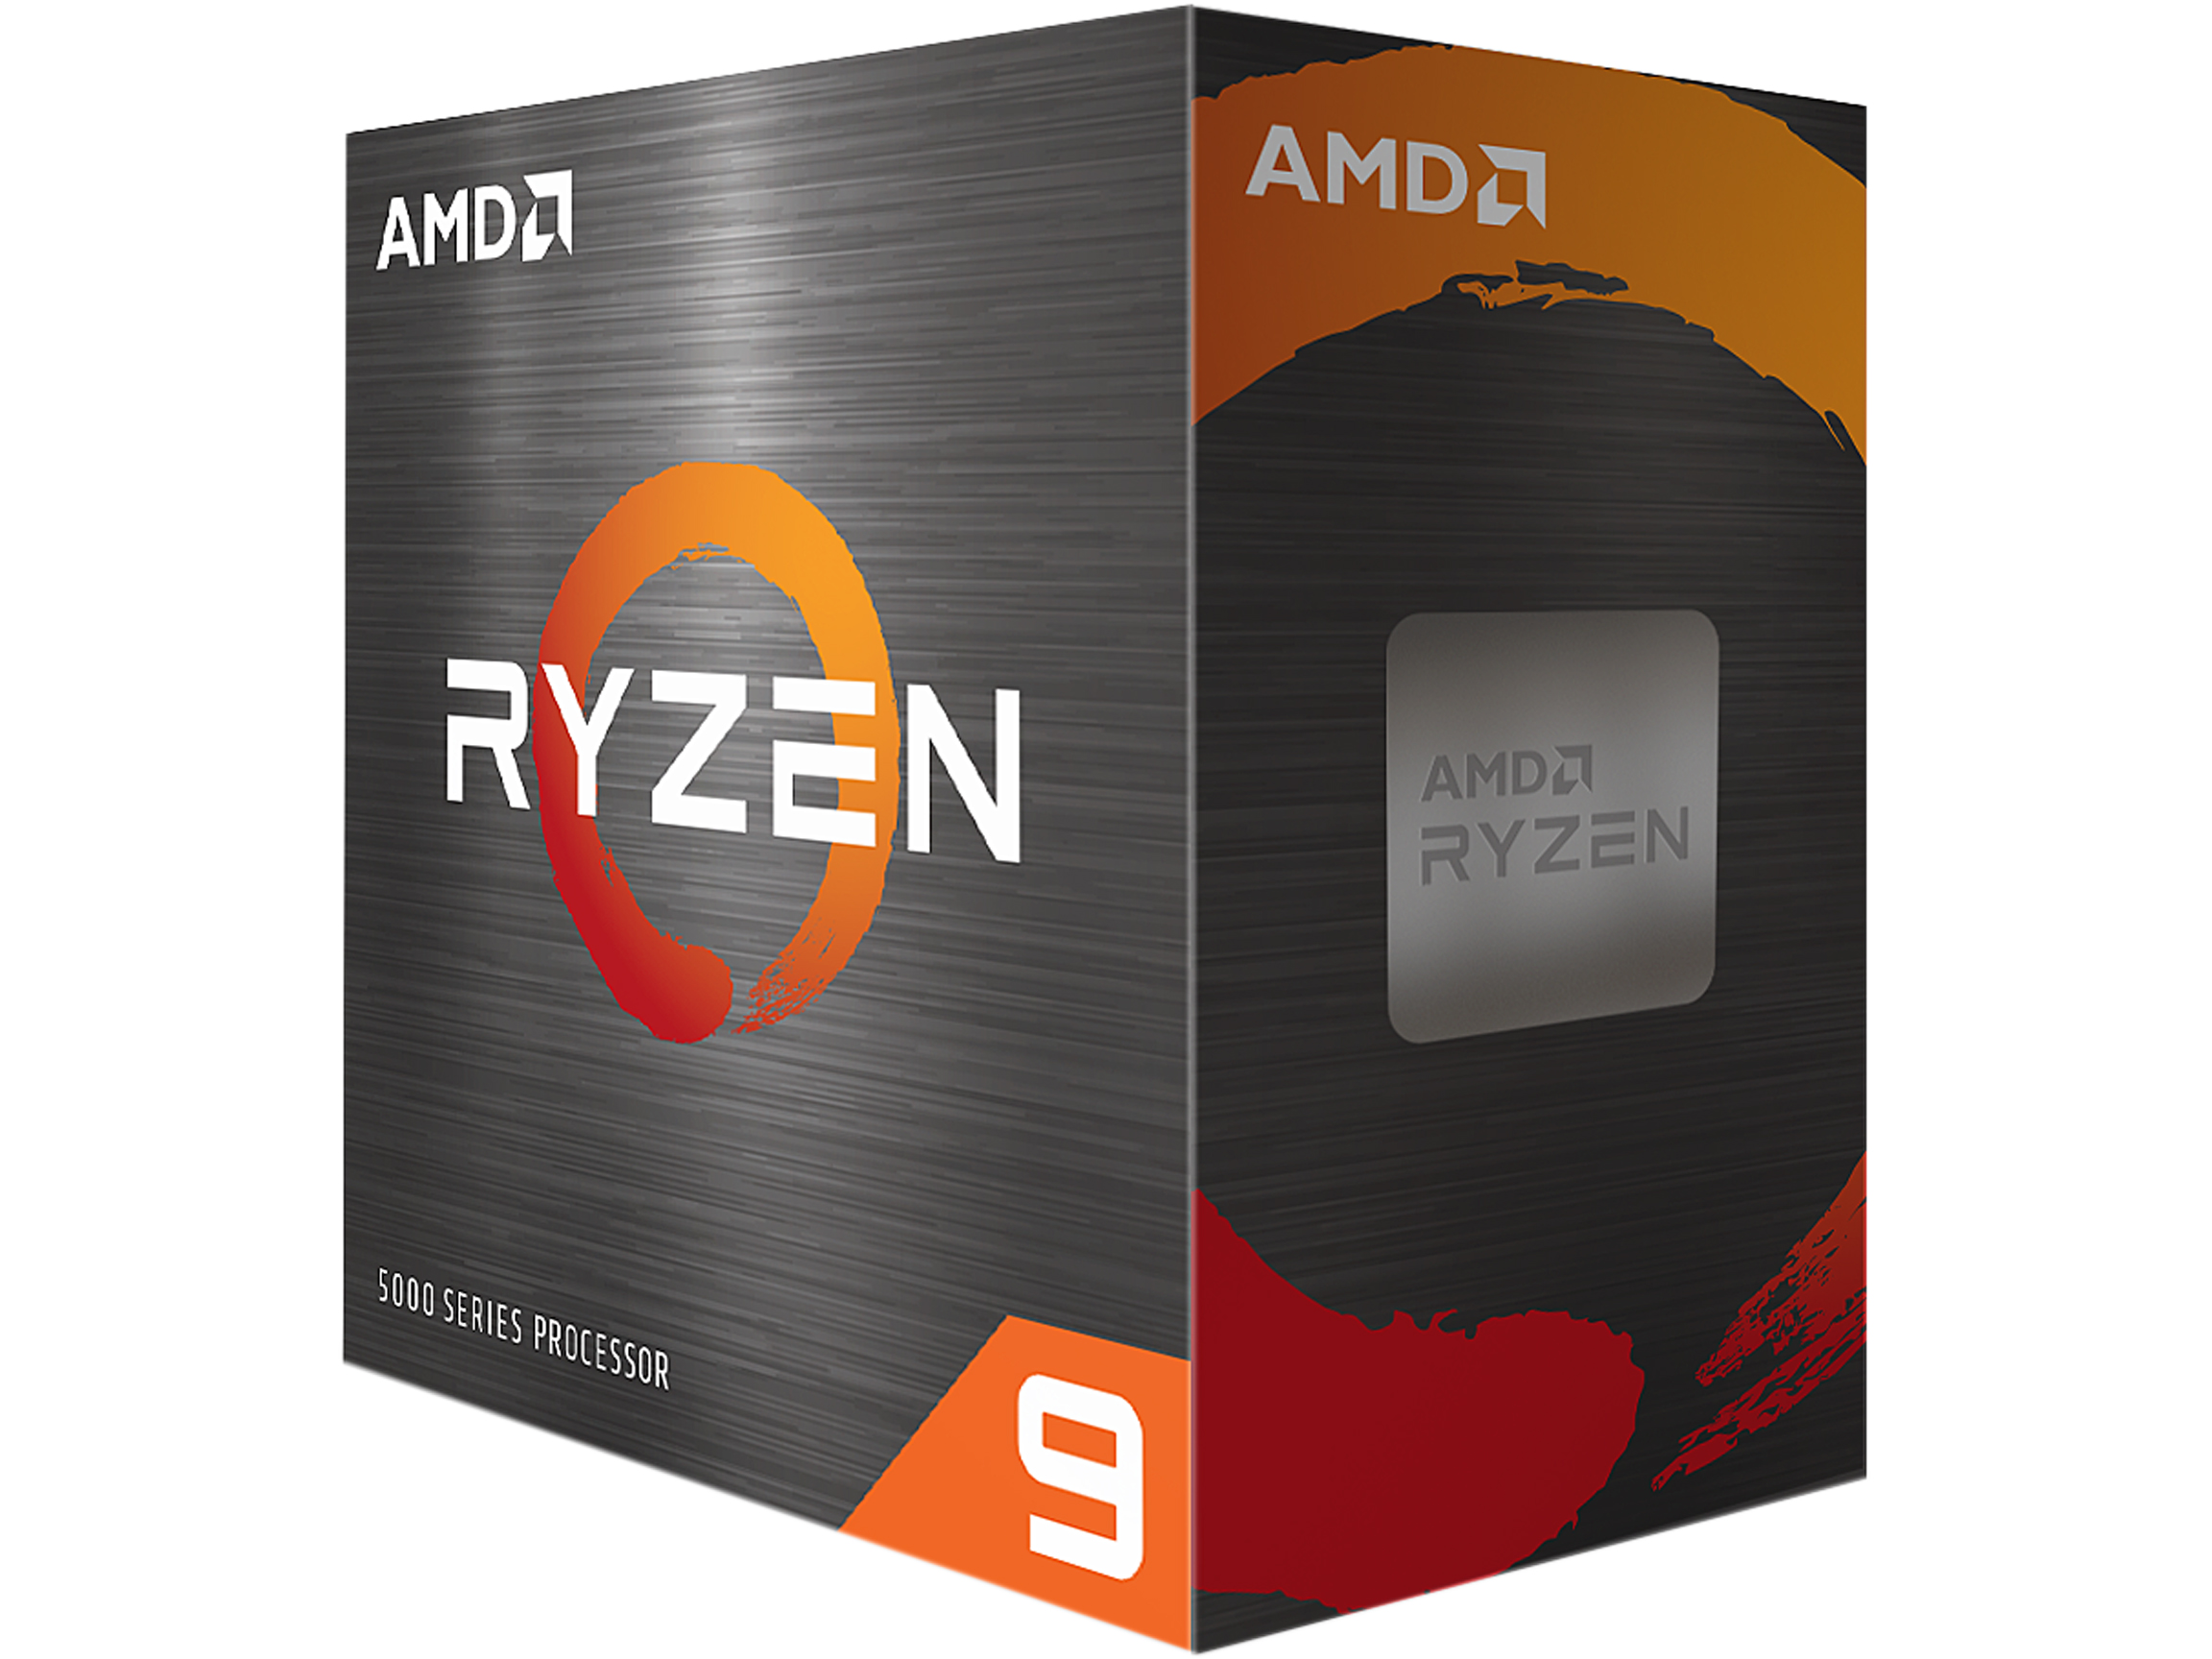 AMD Ryzen 9 5900X Desktop Processor @Newegg $304.49